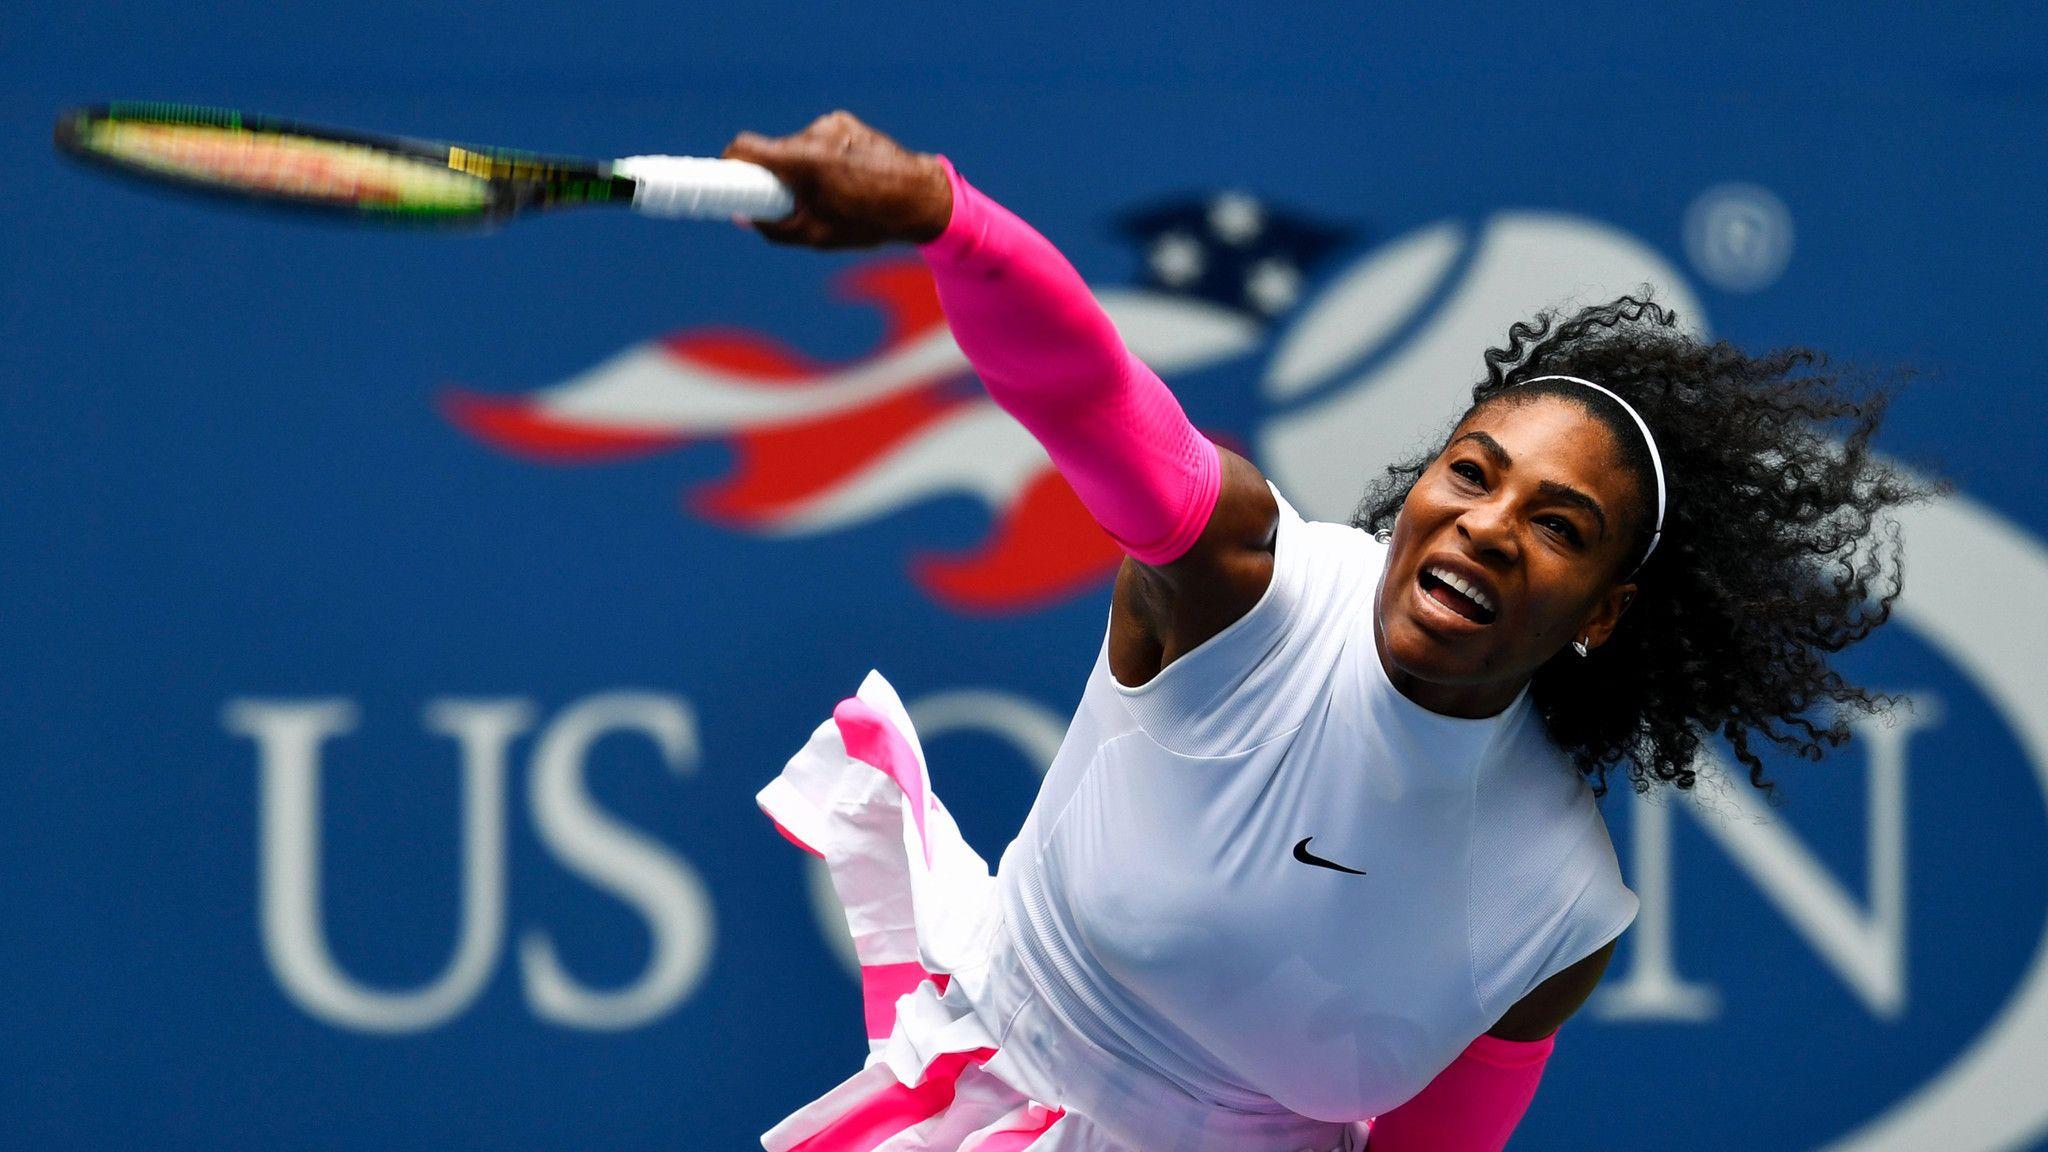 Serena Williams reaches fourth round at U.S. Open